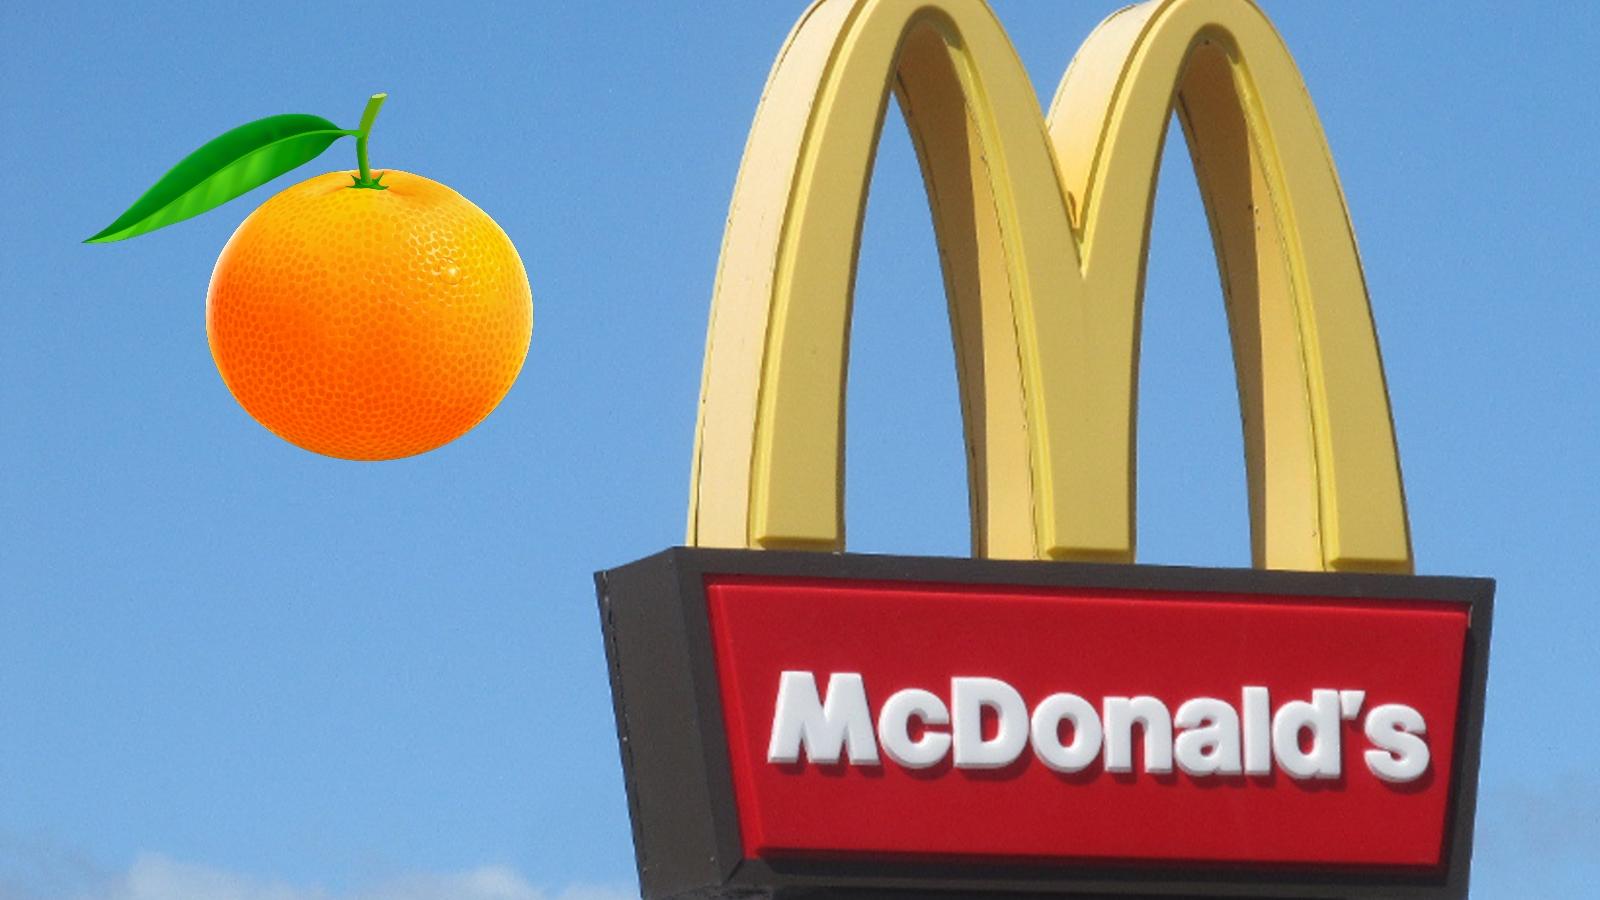 McDonald's sign with orange